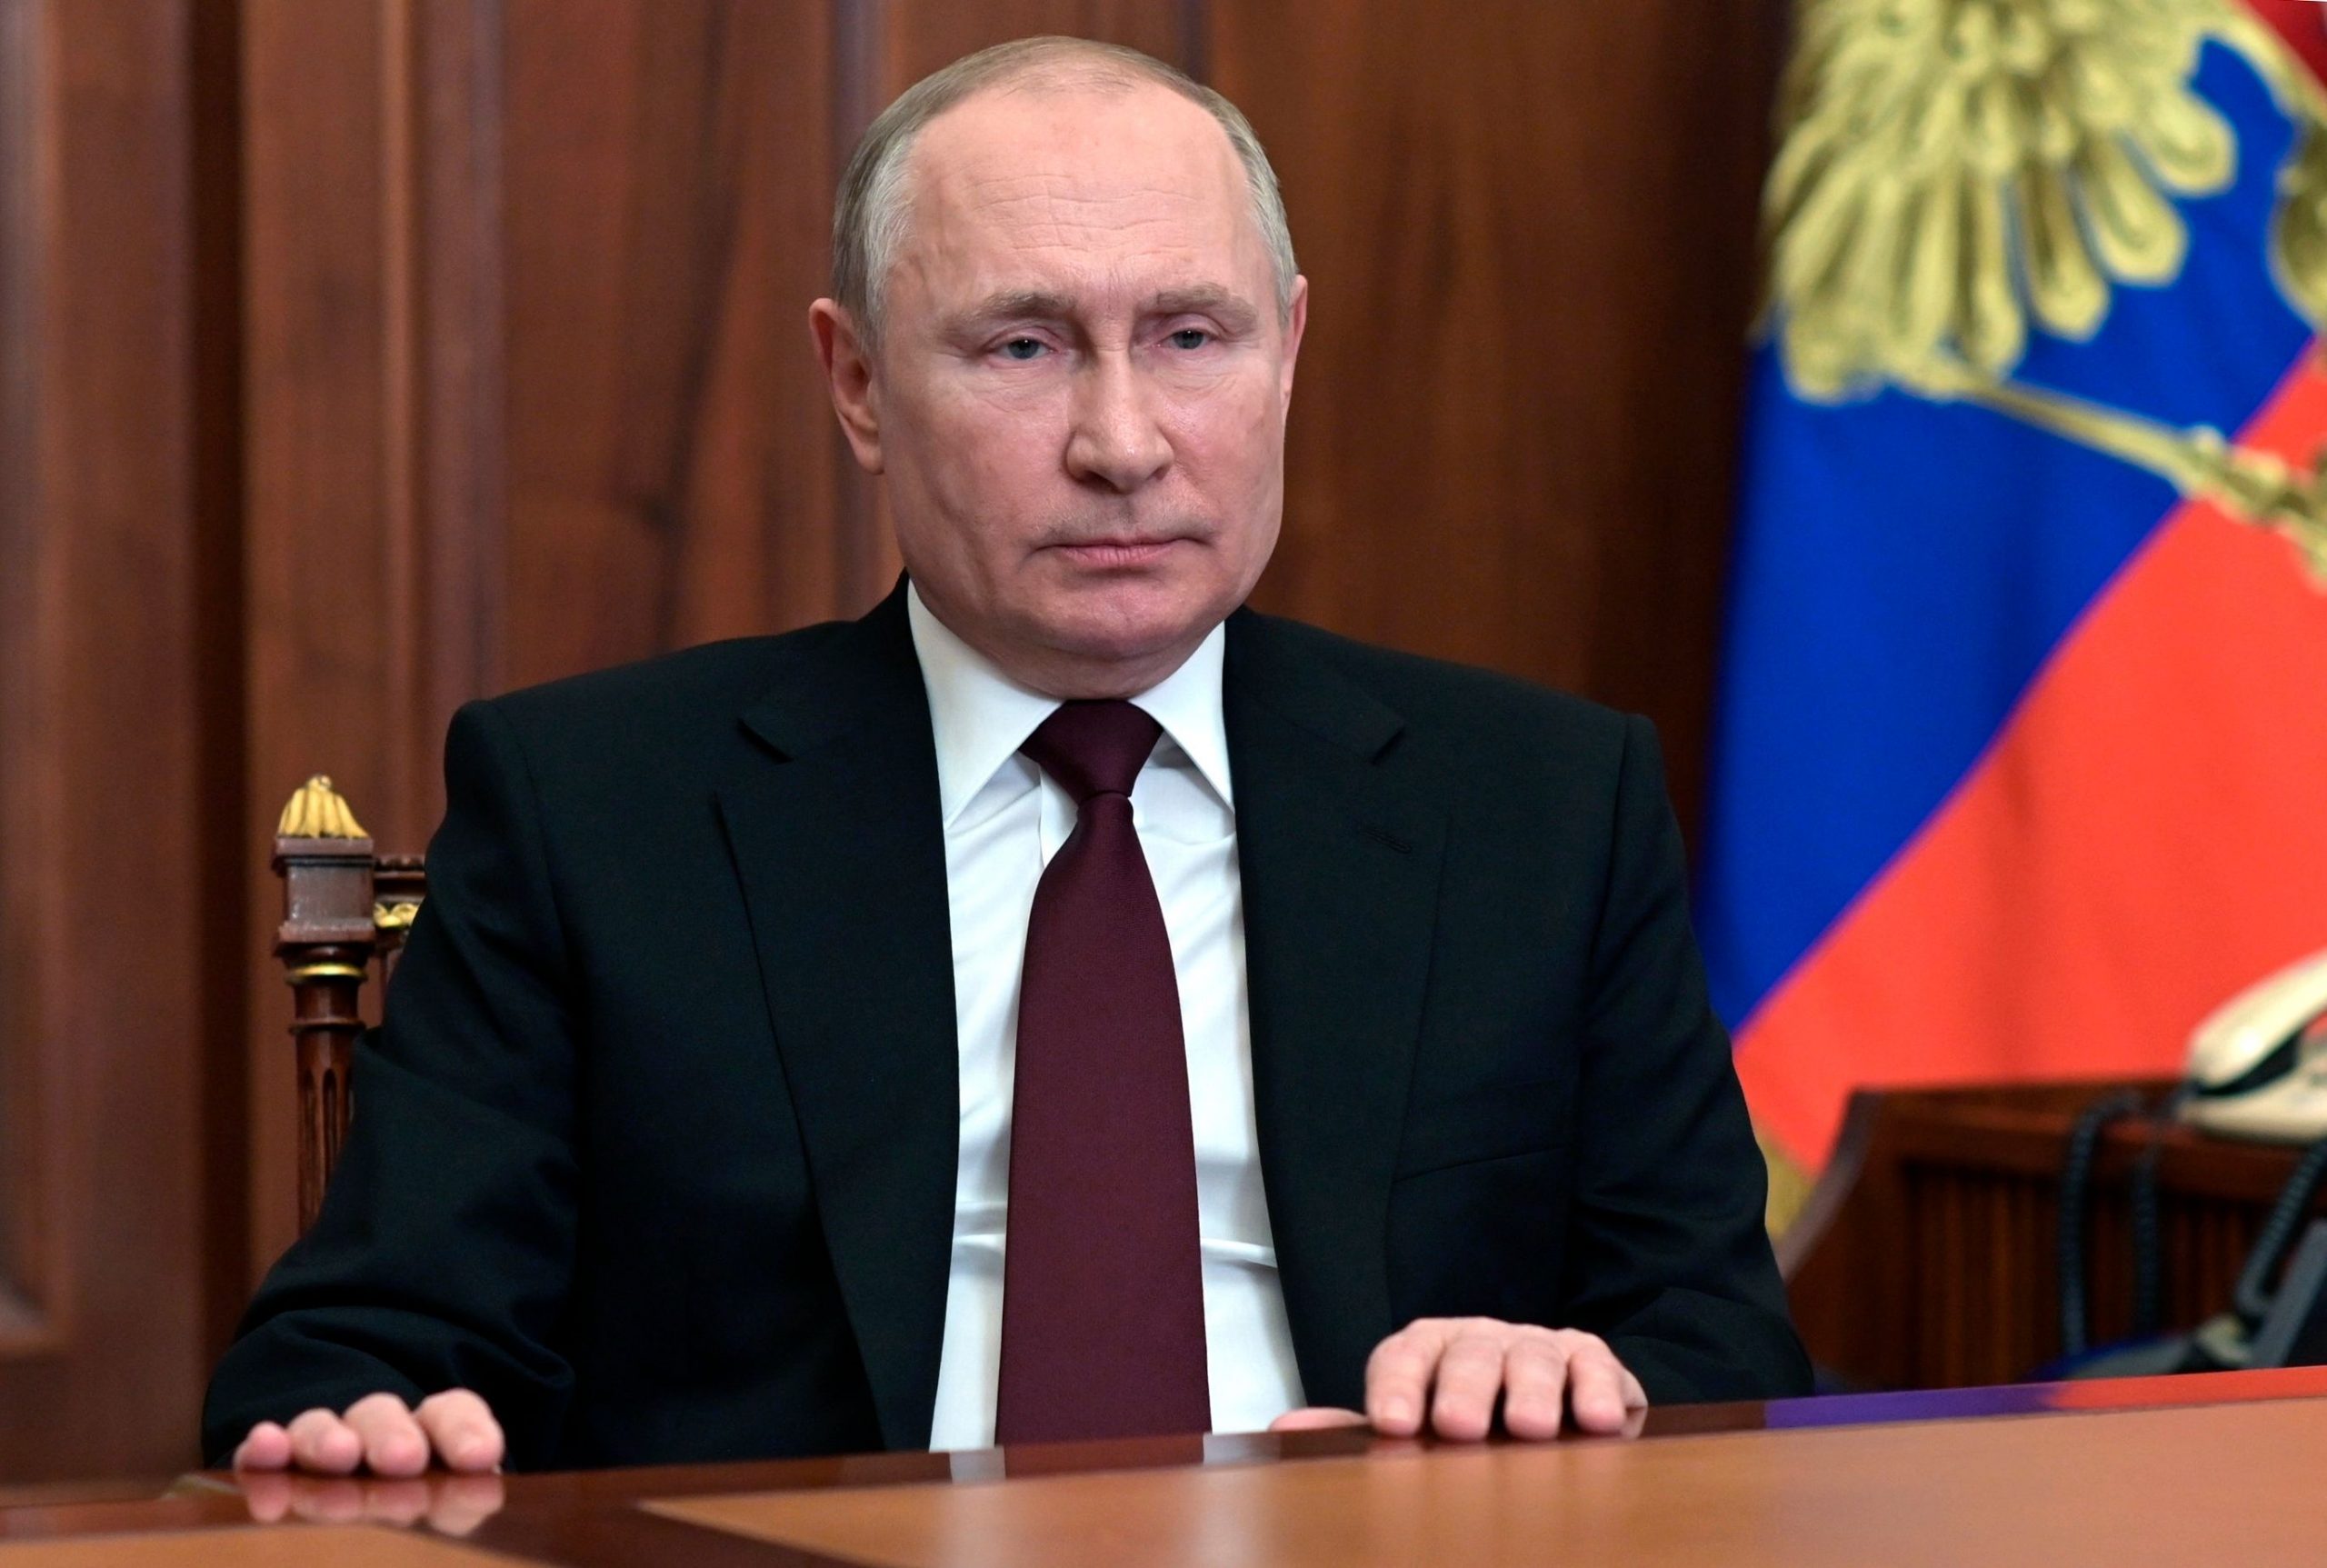 Explainer: A look at the toughest US sanctions facing Russia amid Ukraine crisis